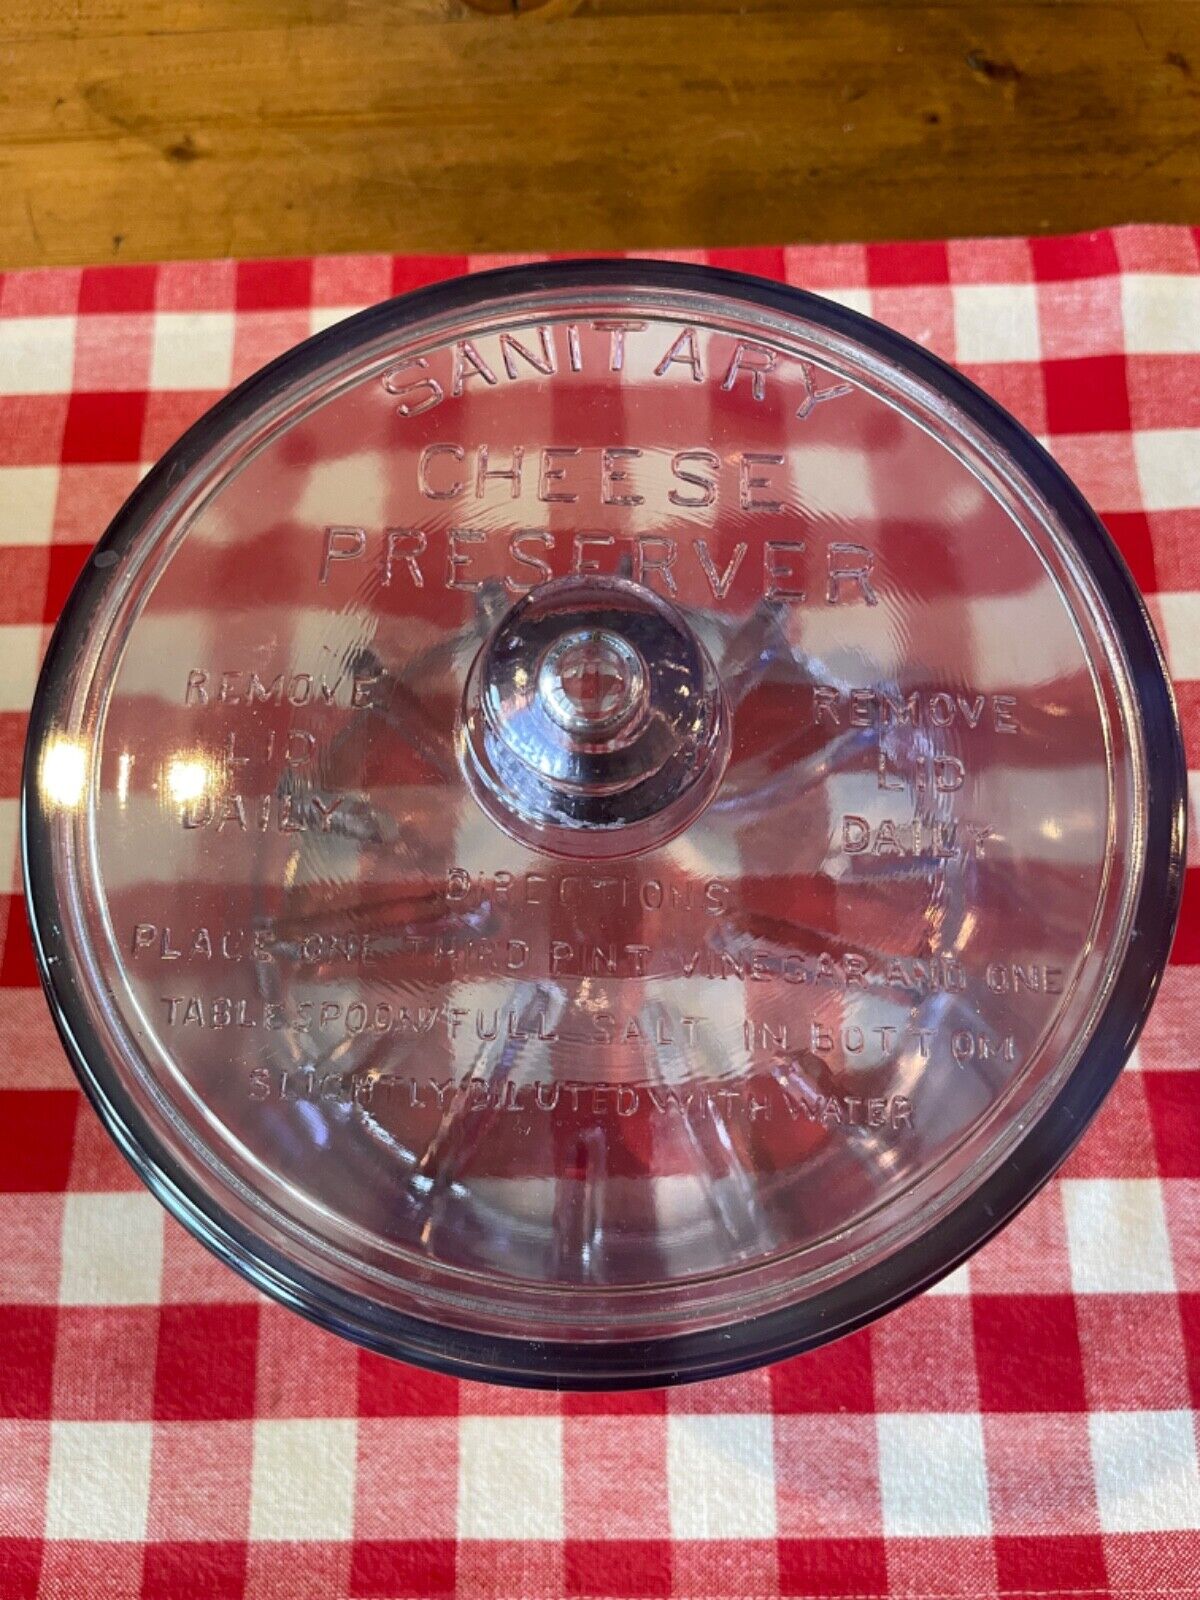 Vintage Sanitary Cheese Preserver - 1930s Heavy Glass Jar w/ Lid